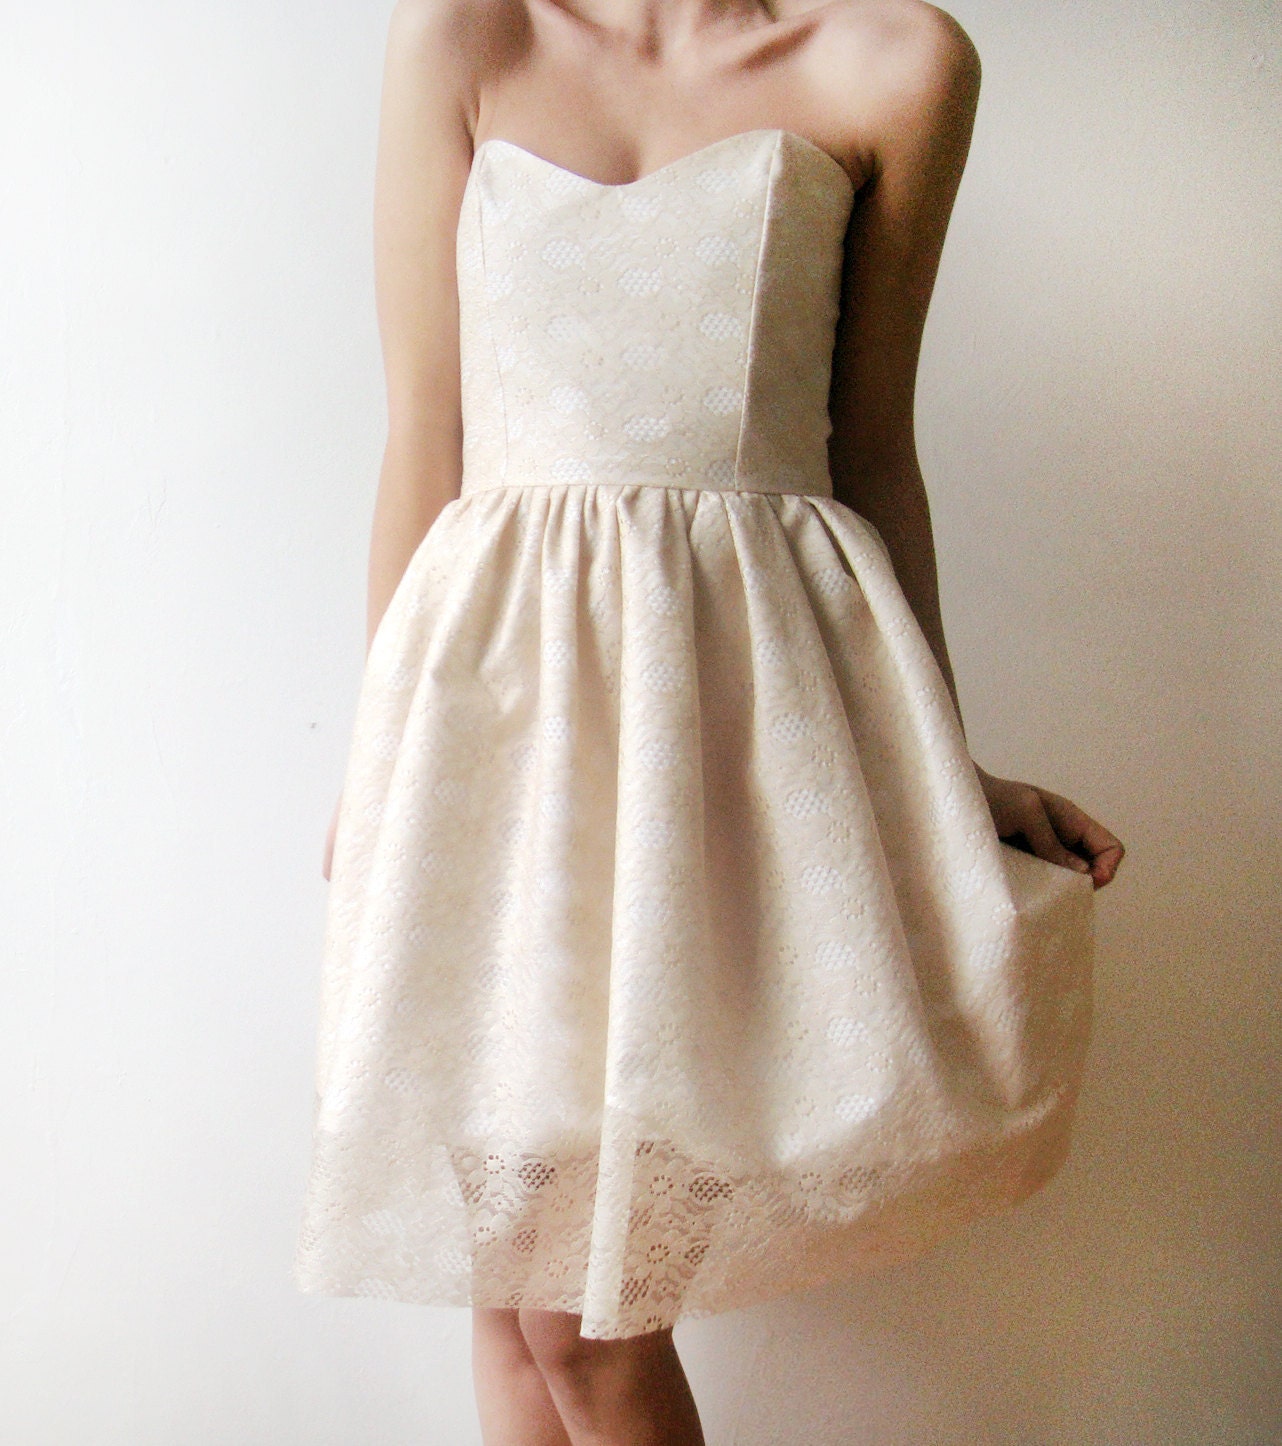 Ivory Dream - Beige Ivory White Lace Dress and Cotton - short wedding dress , party dress - boned bodice dress - Your measurement